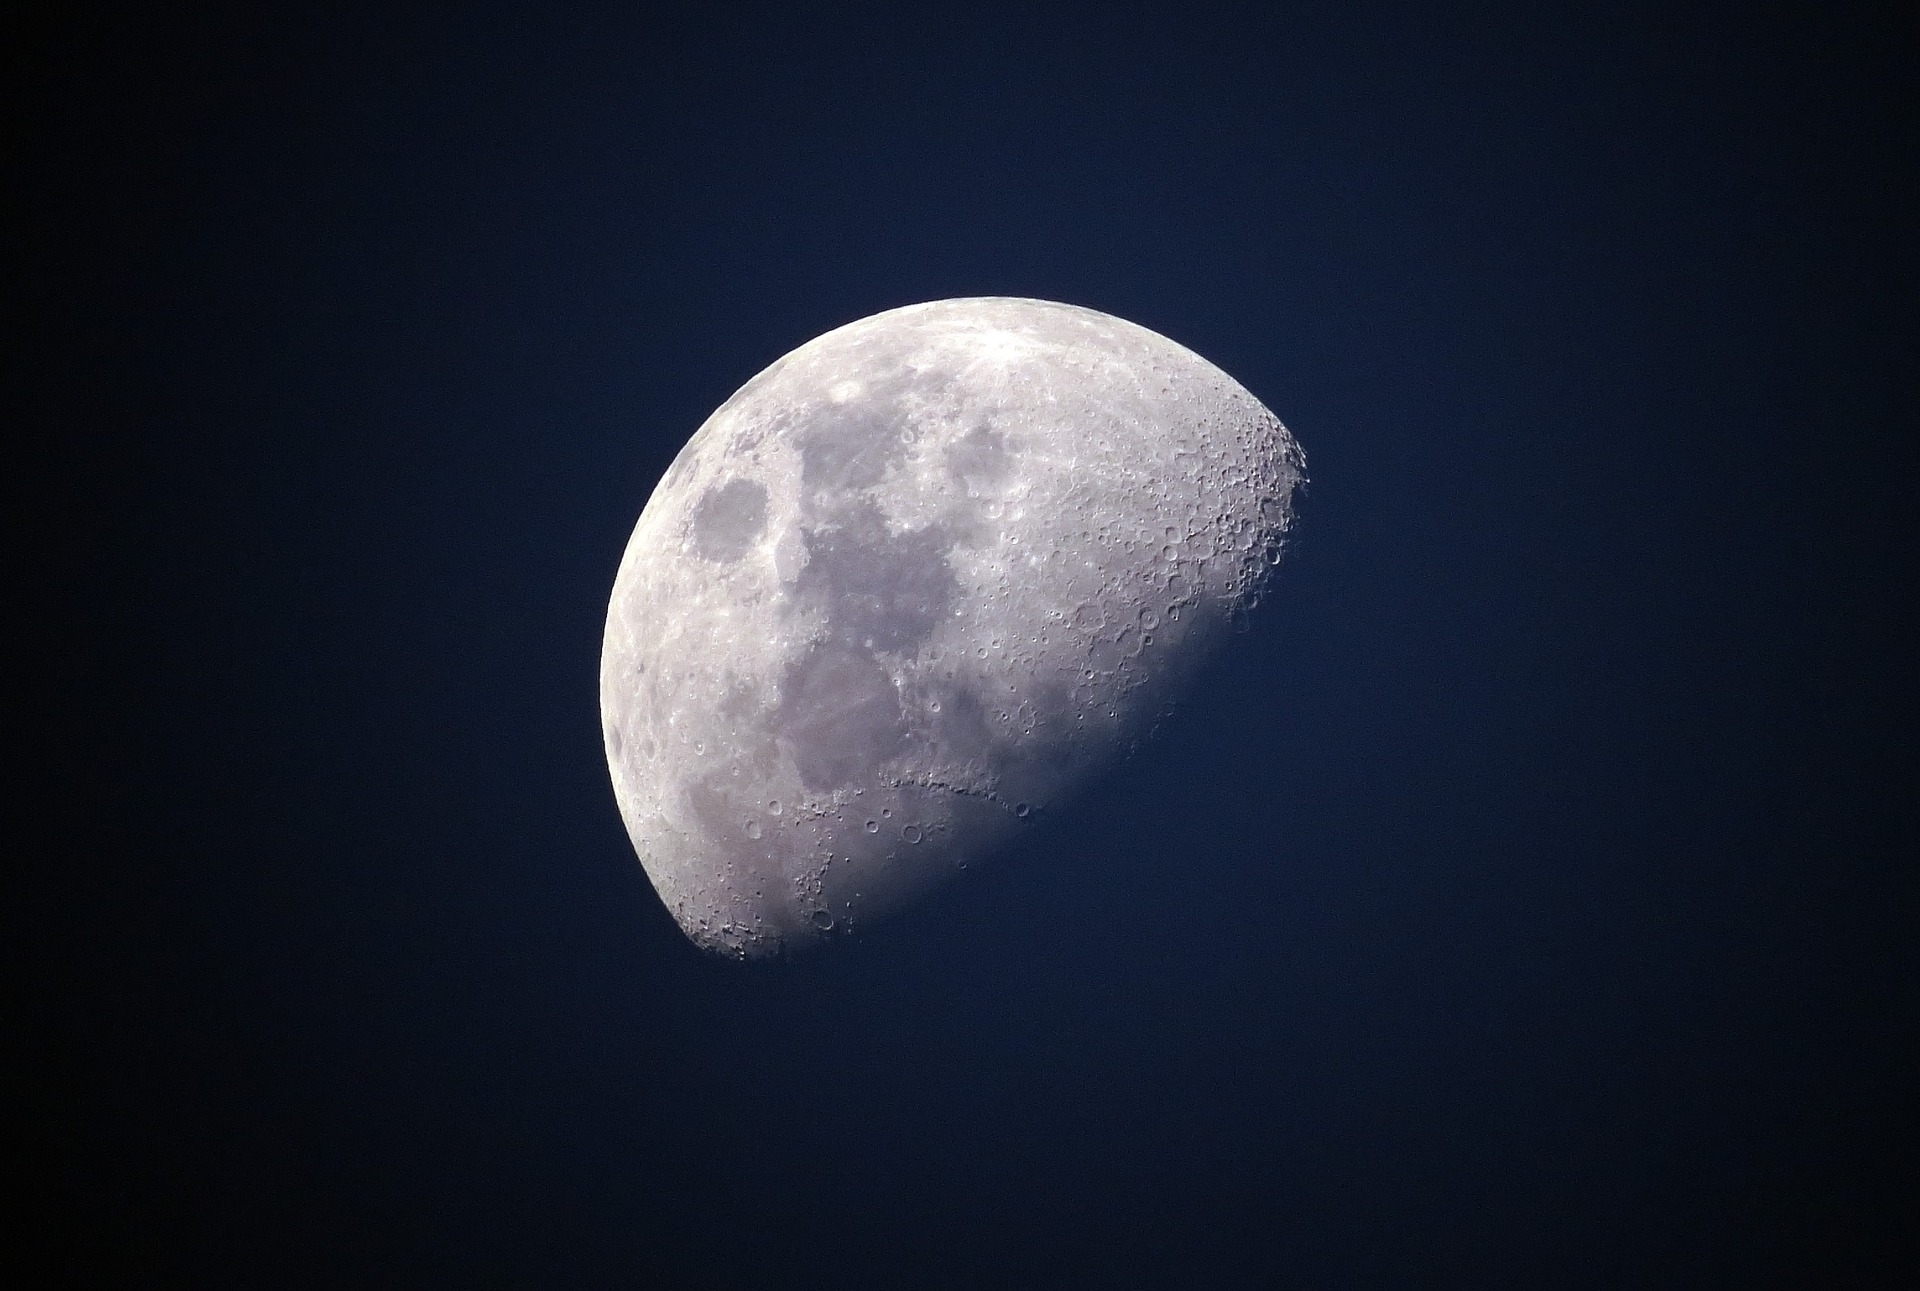 Earth's Moon, public domain image